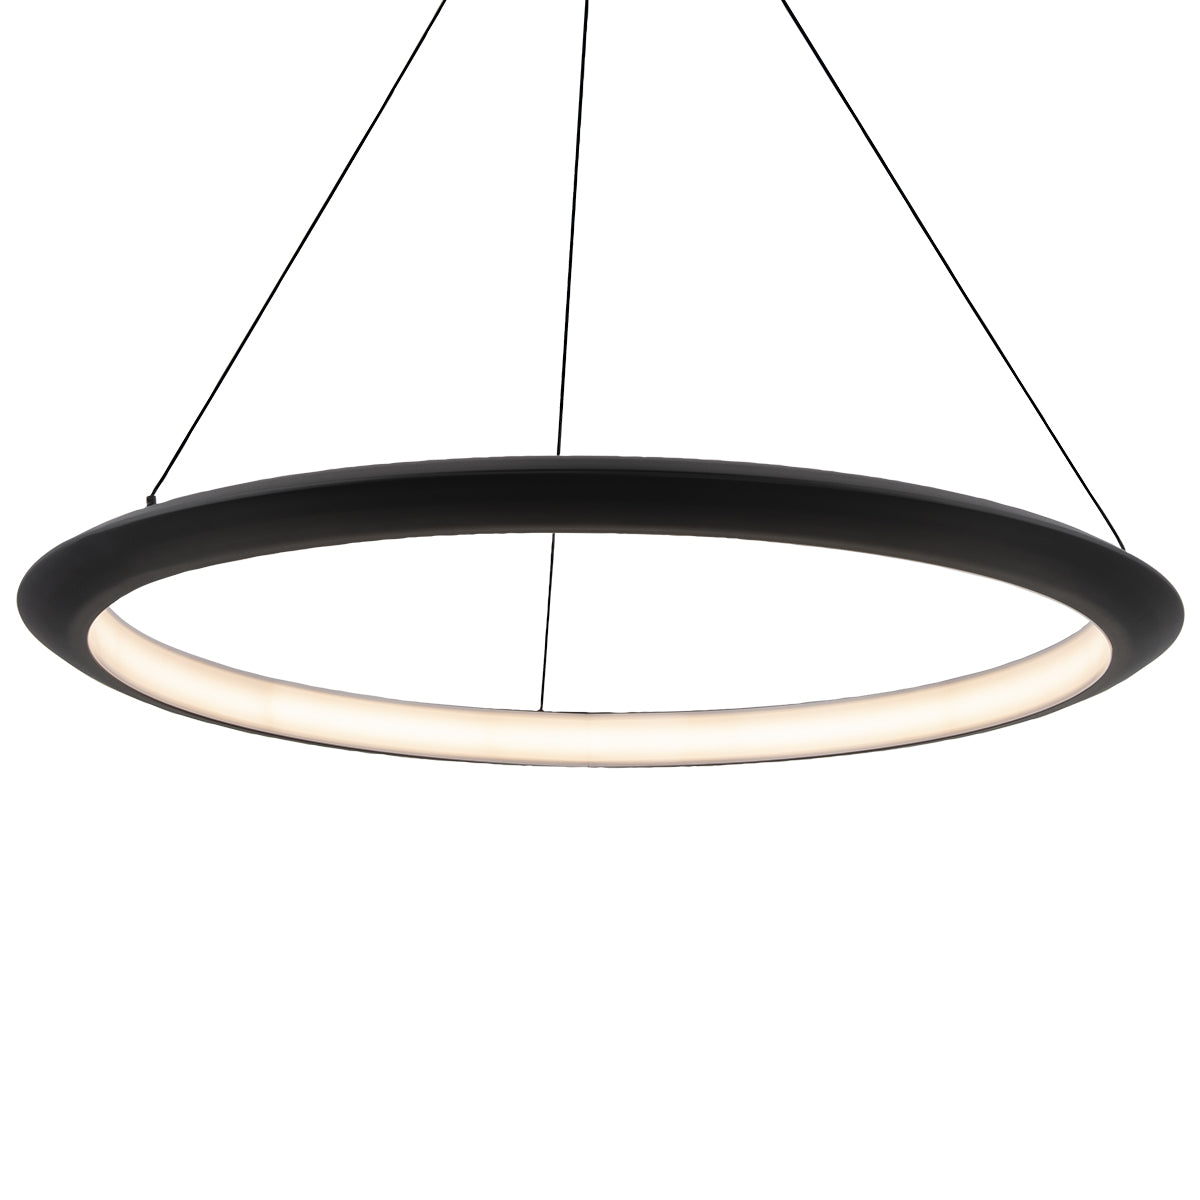 Modern Forms - PD-55048-30-BK - LED Pendant - The Ring - Black